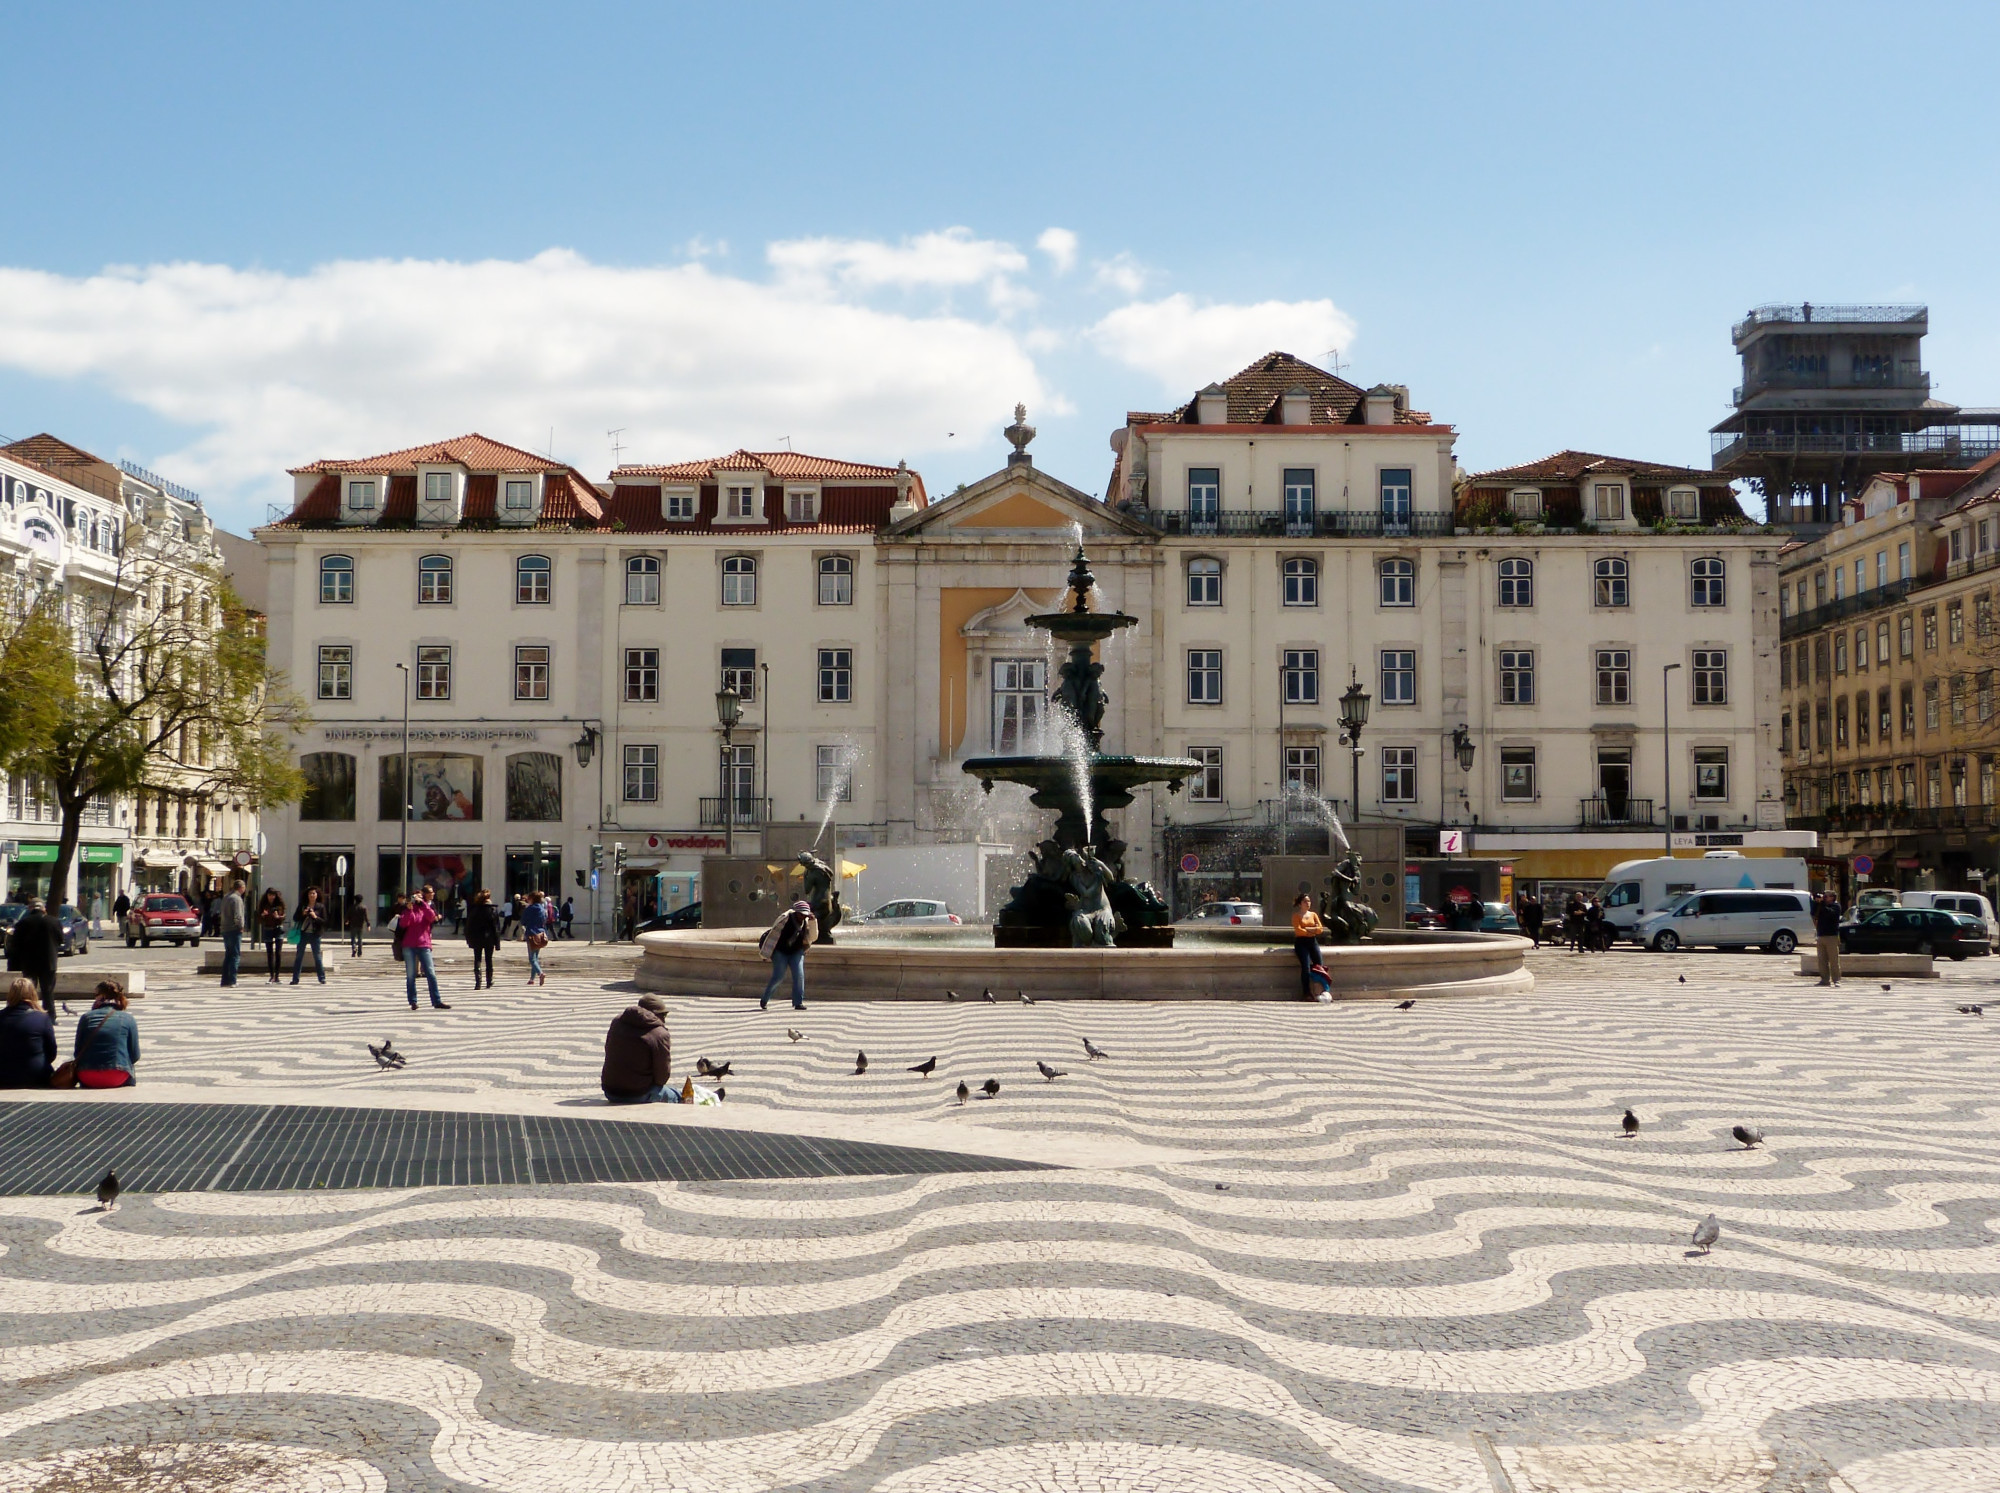 Praça do Rossio (Lisbon's central Plaza)”